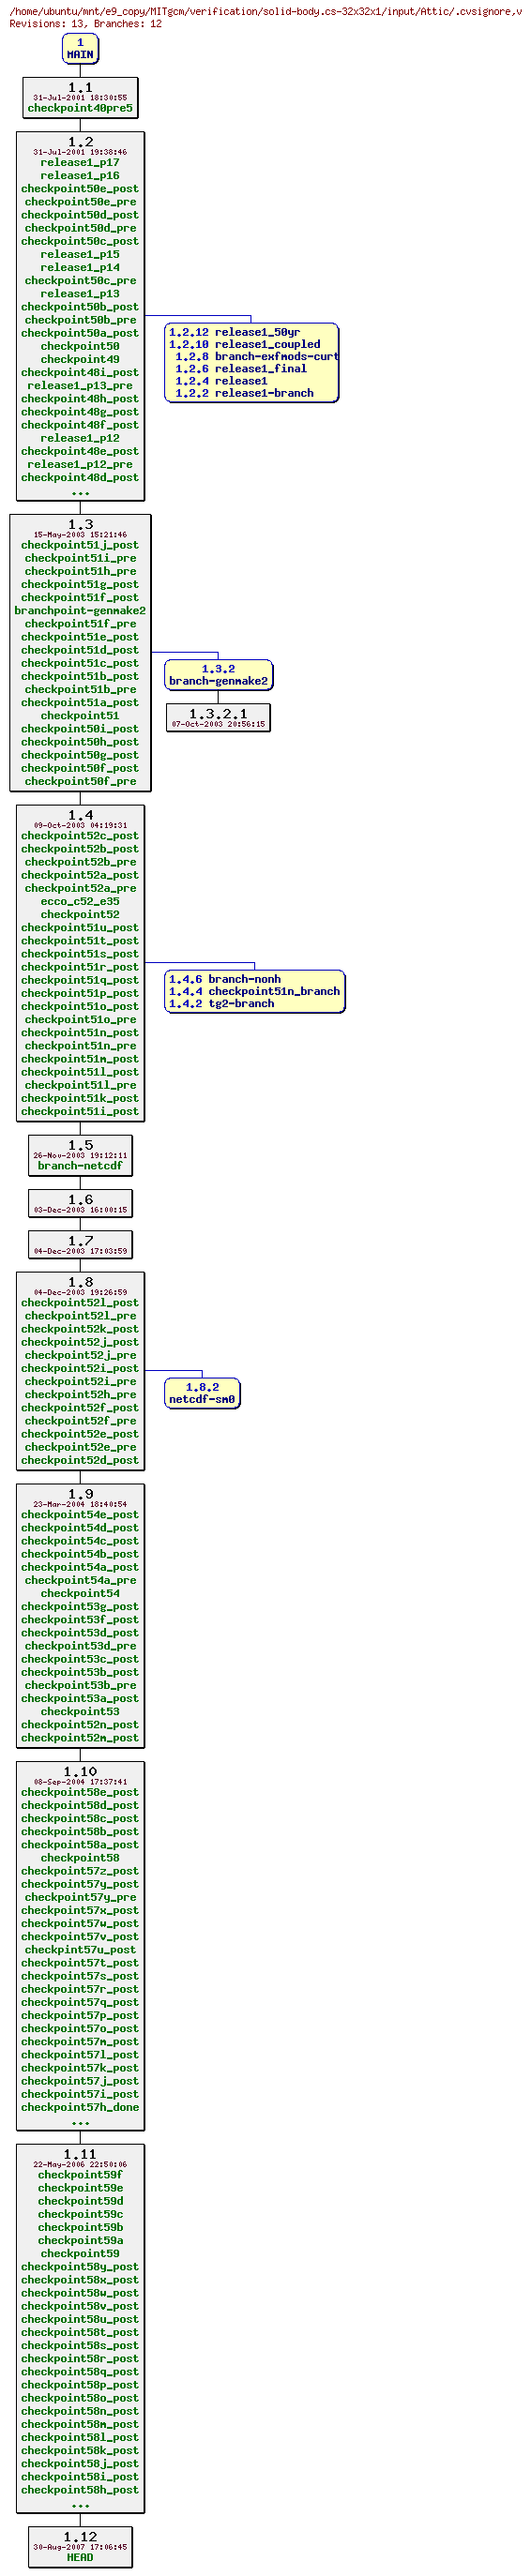 Revisions of MITgcm/verification/solid-body.cs-32x32x1/input/.cvsignore